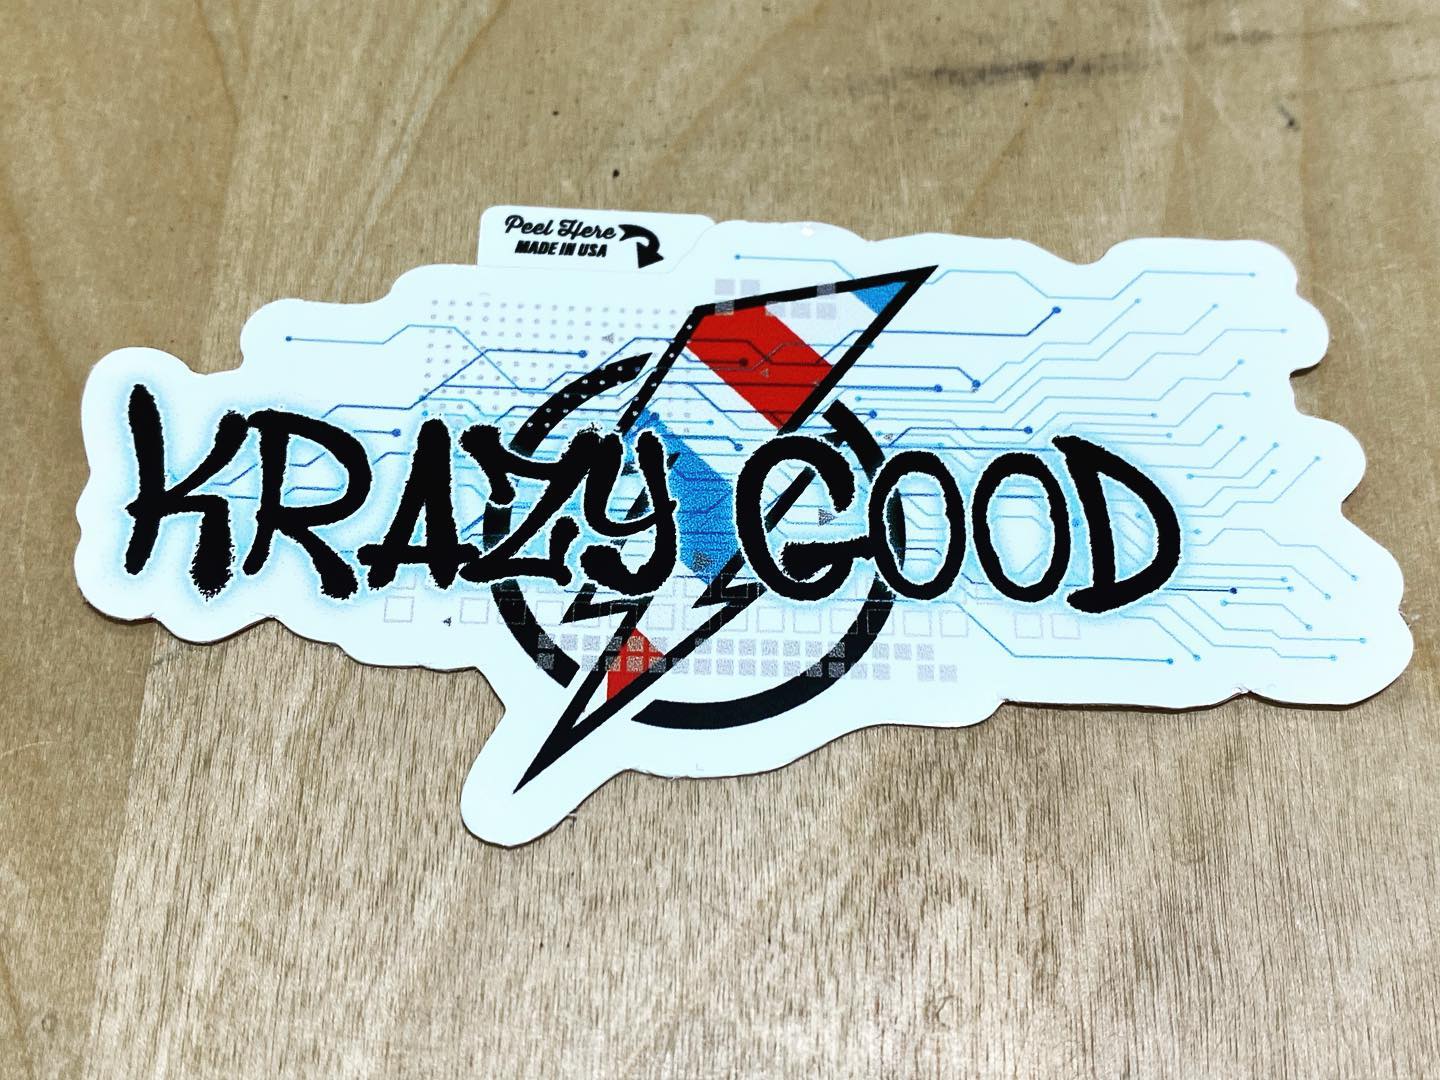 StickersAndMore.com sticker of the day. Krazy Good LLC. #stickers #customstickers #logo